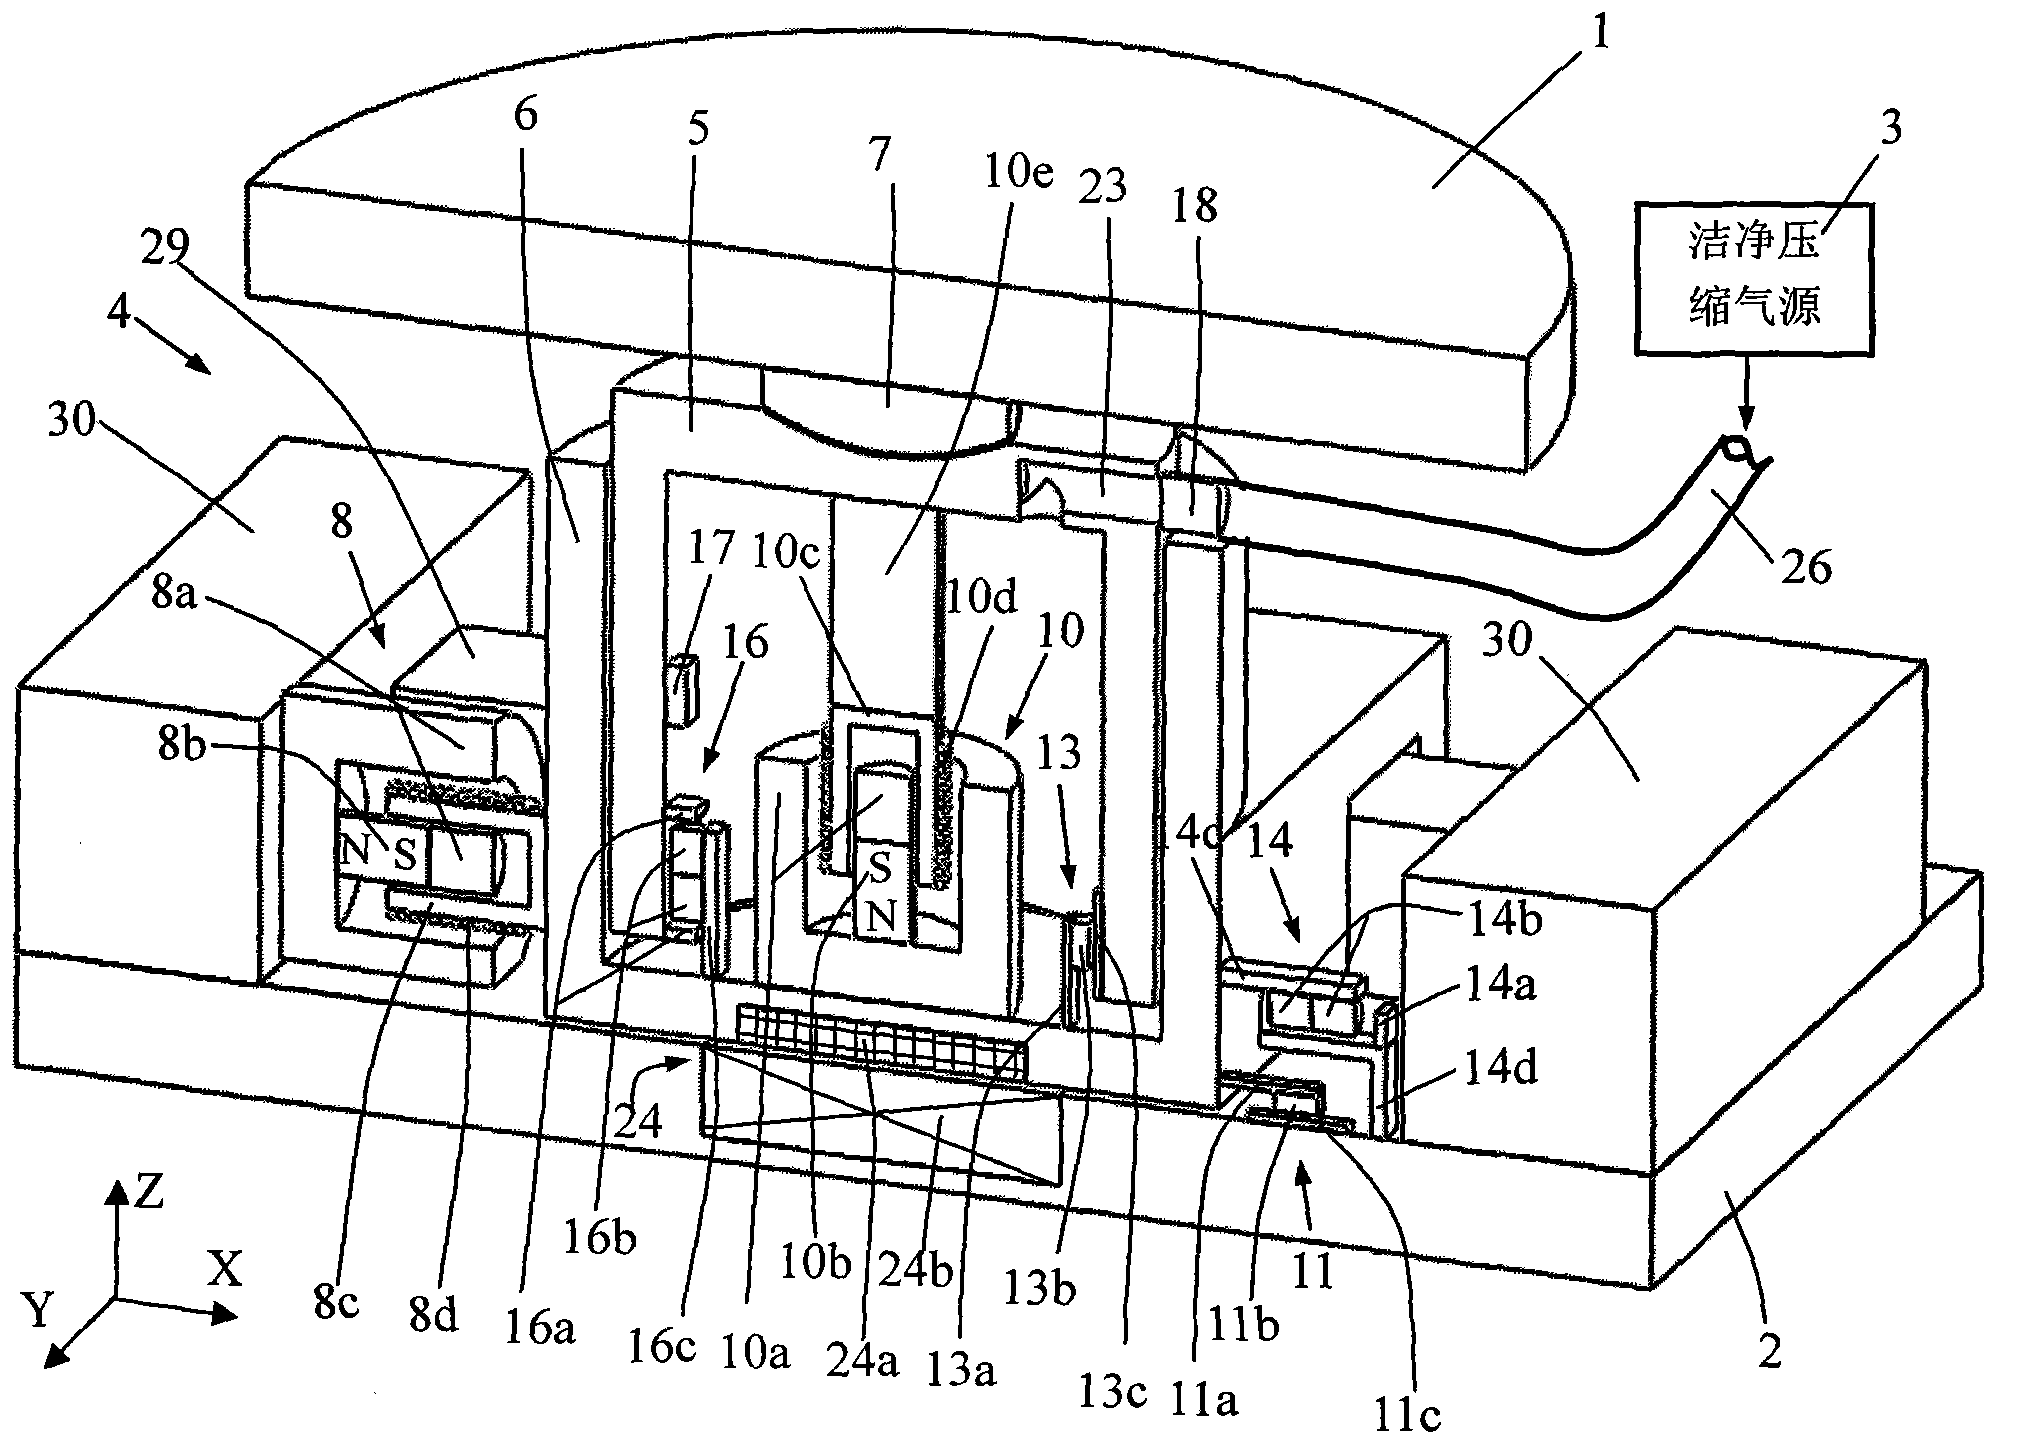 Maglev vibration isolator with coplanar air bearing orthogonal decoupling and air bearing angular decoupling